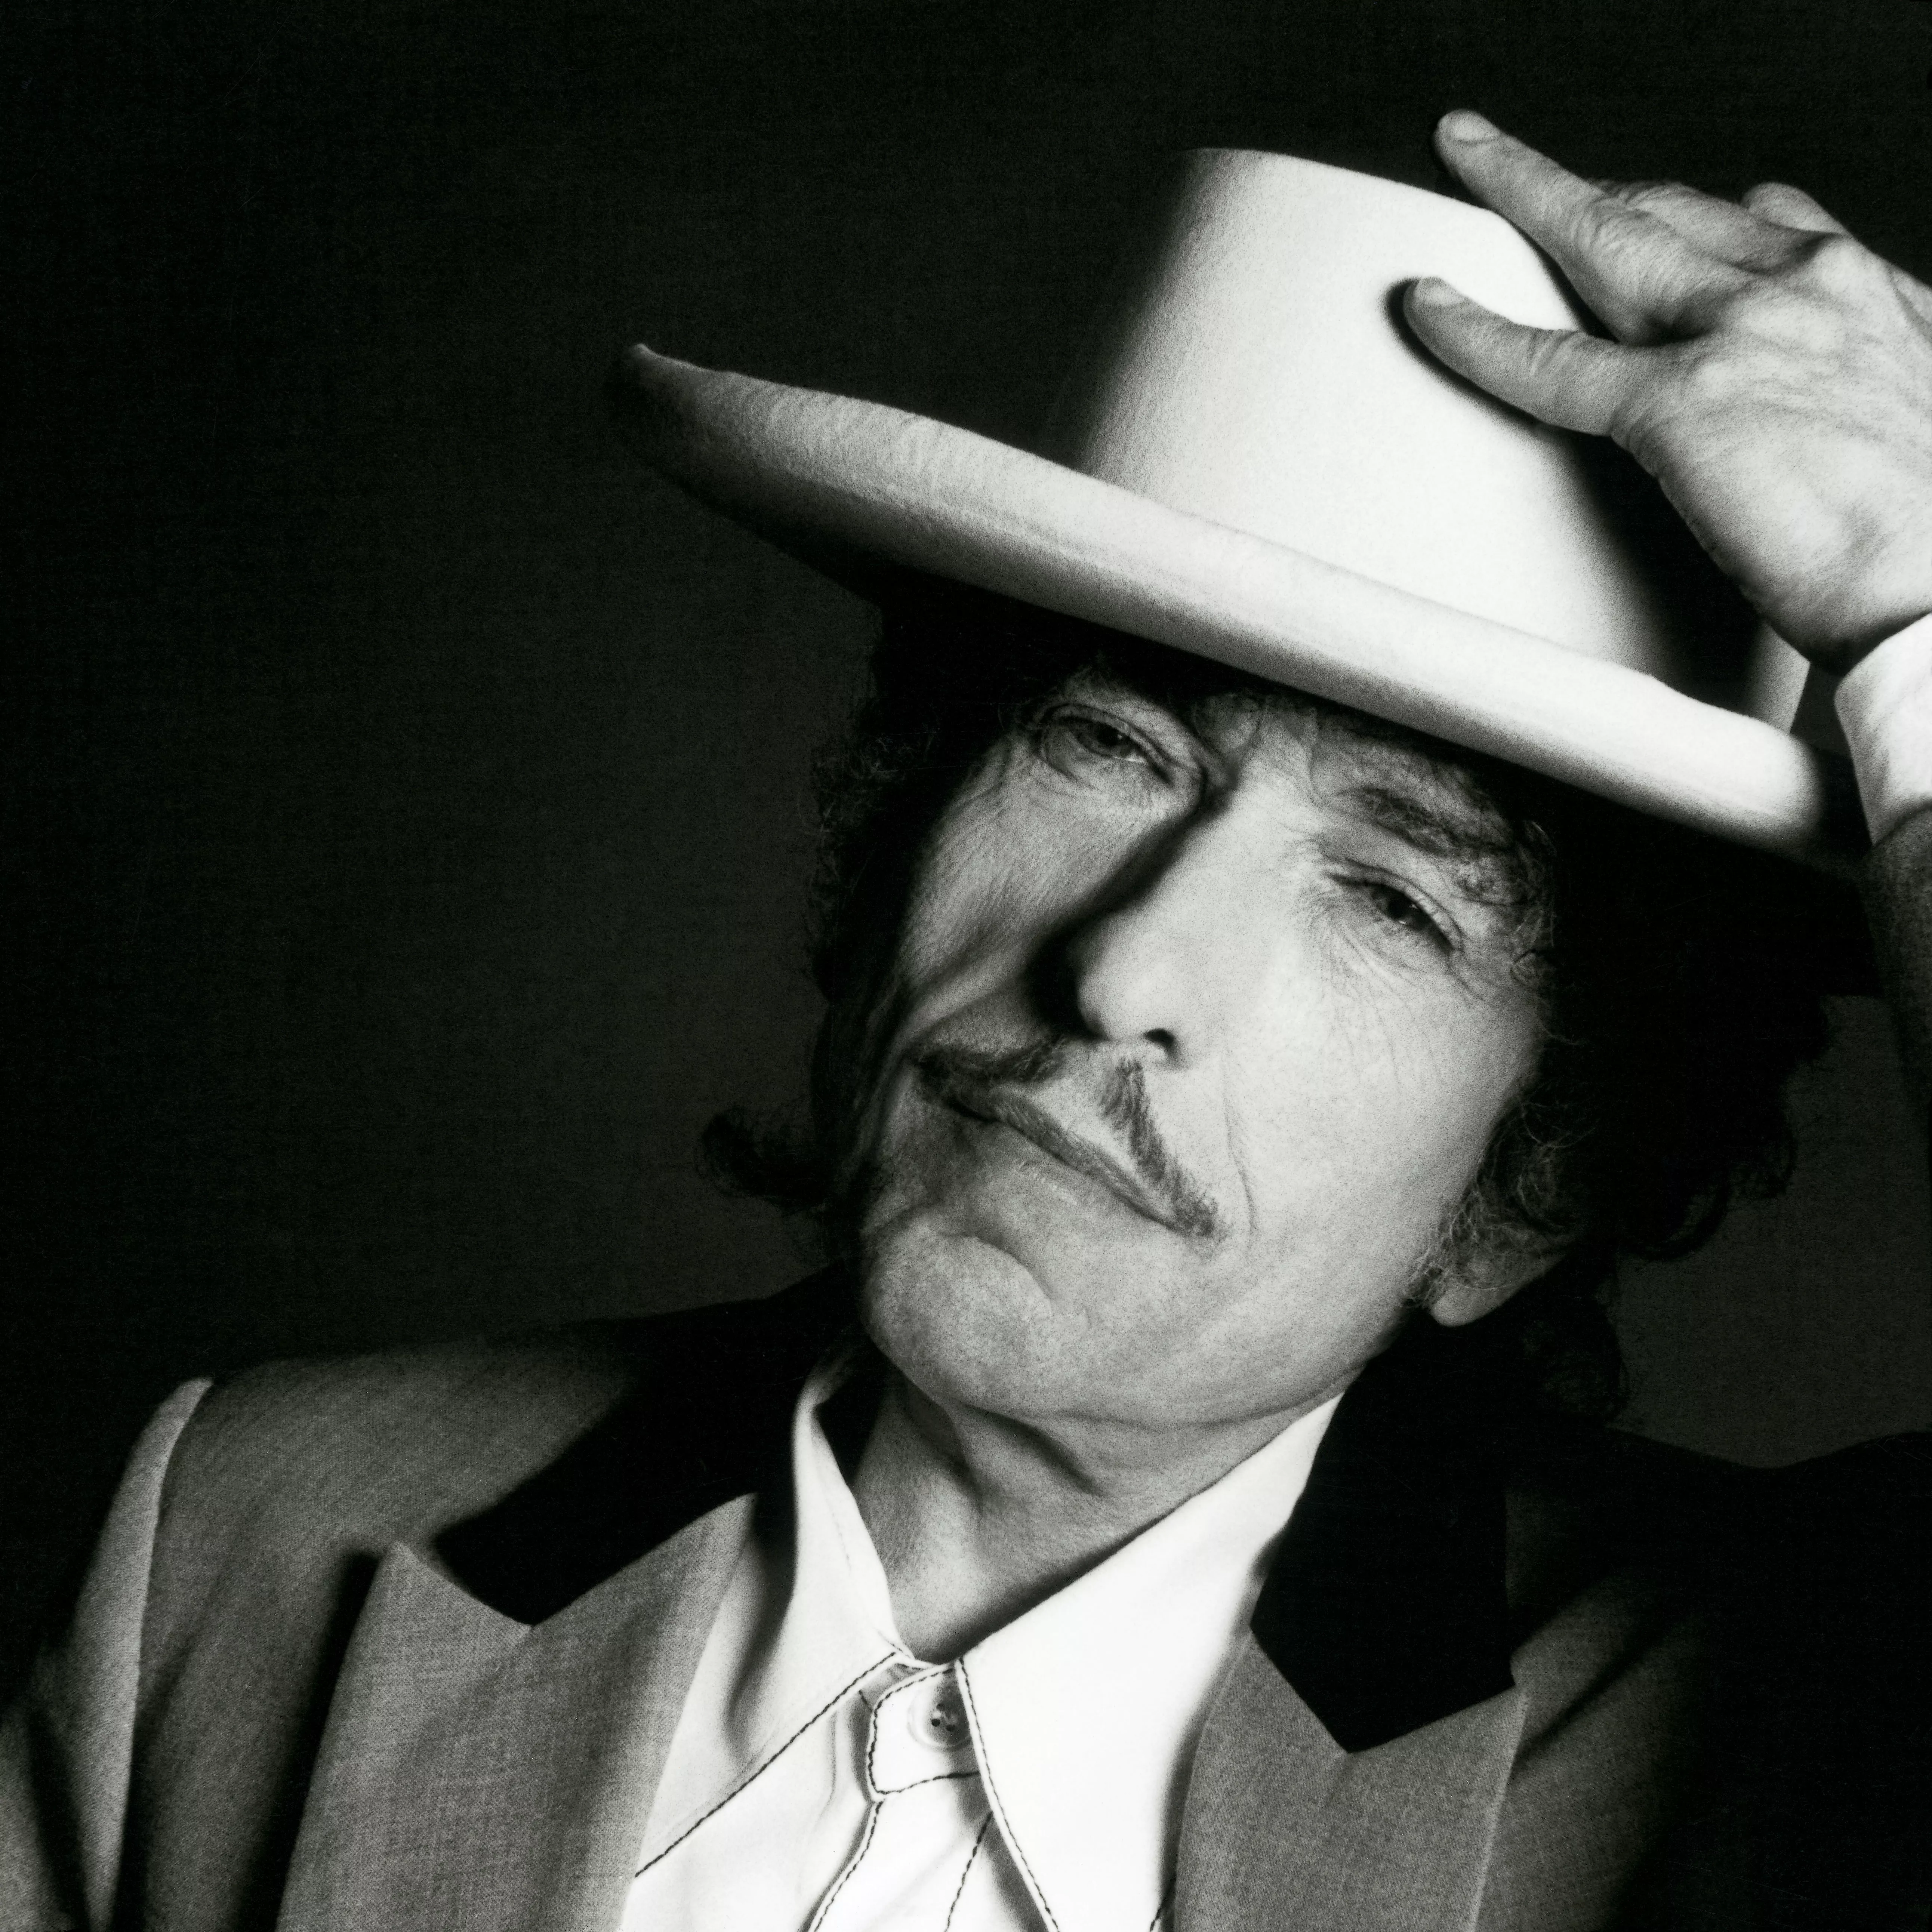 Ikoner tar sig an nyfunna Bob Dylan-låtar